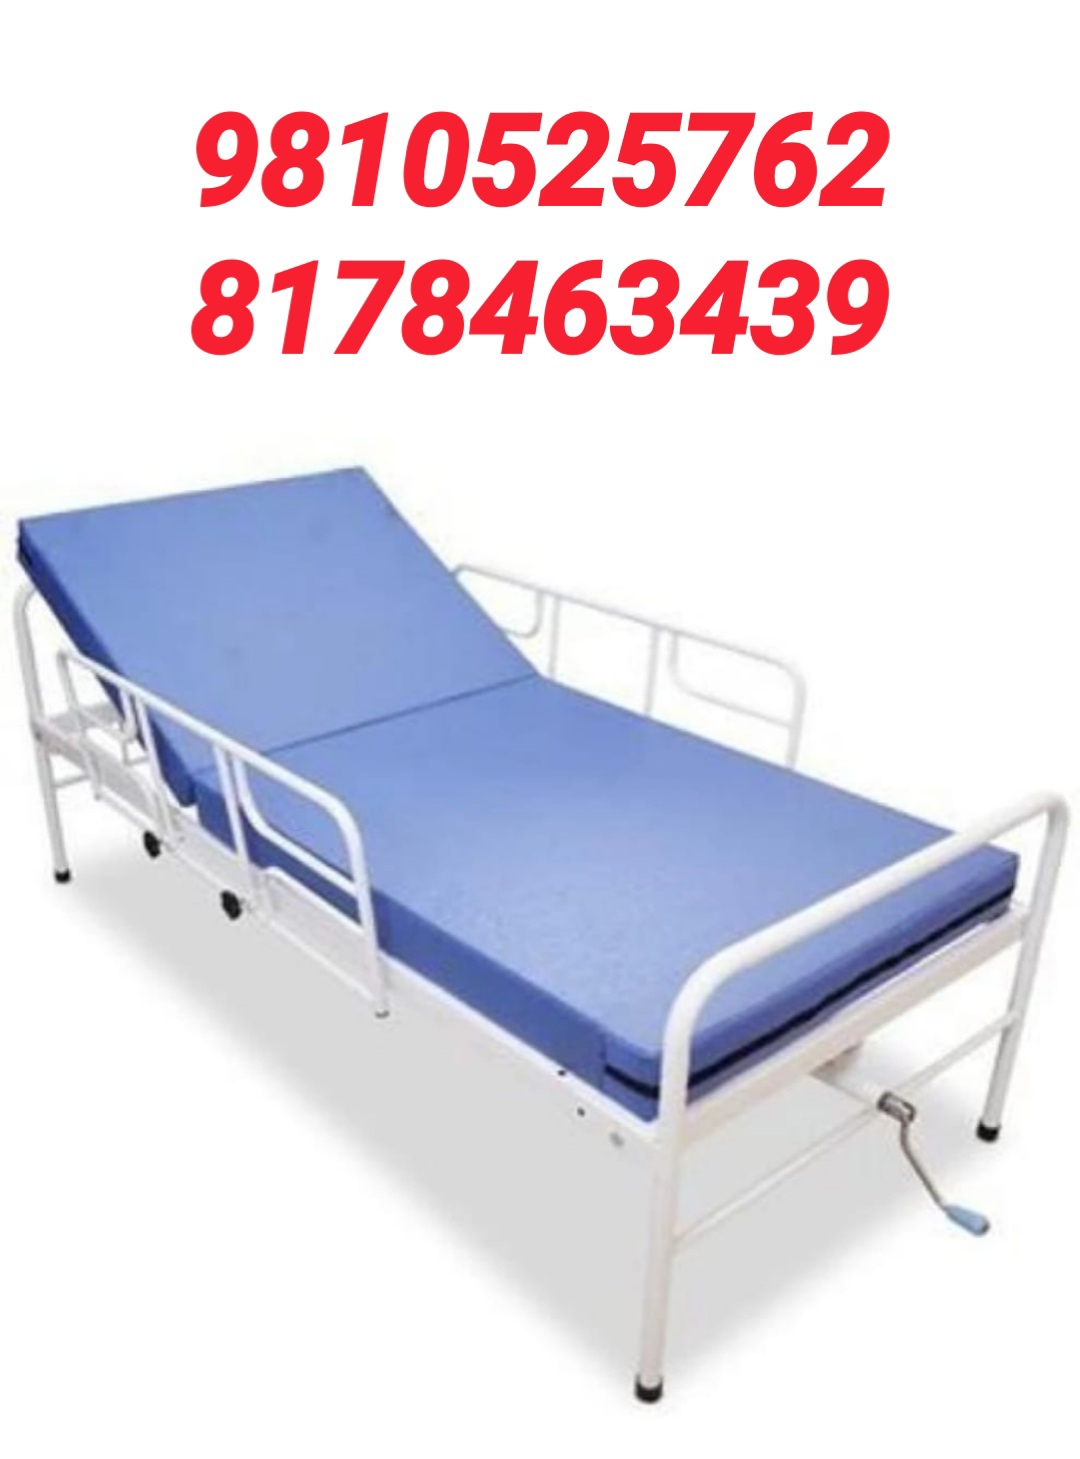 ON CALL 24*7 HOSPITAL BED RENT INDIRAPURAM 9810525762